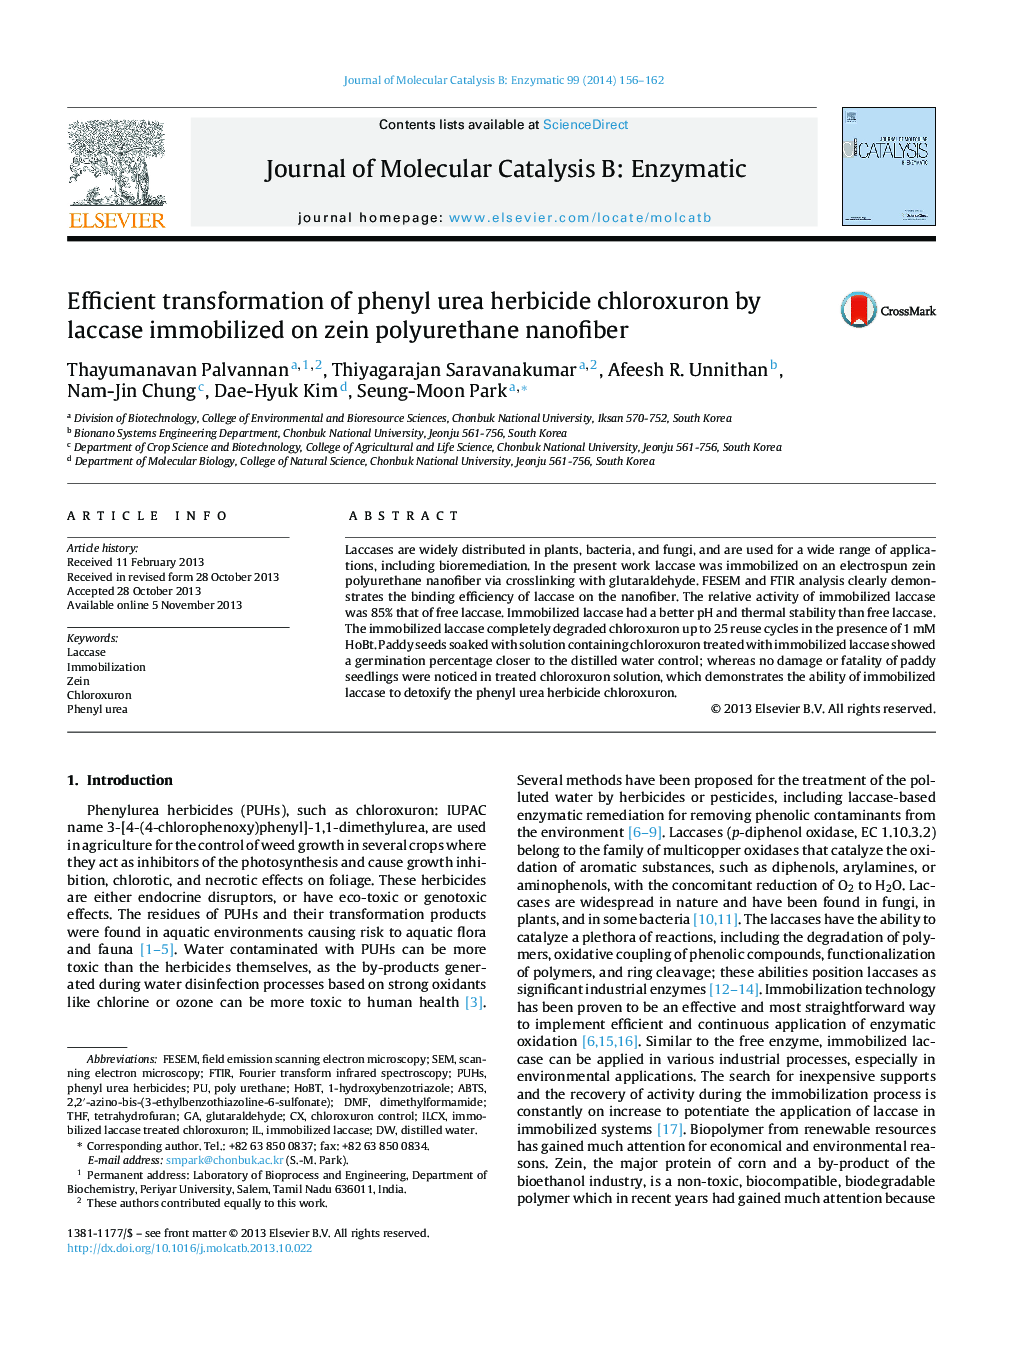 Efficient transformation of phenyl urea herbicide chloroxuron by laccase immobilized on zein polyurethane nanofiber